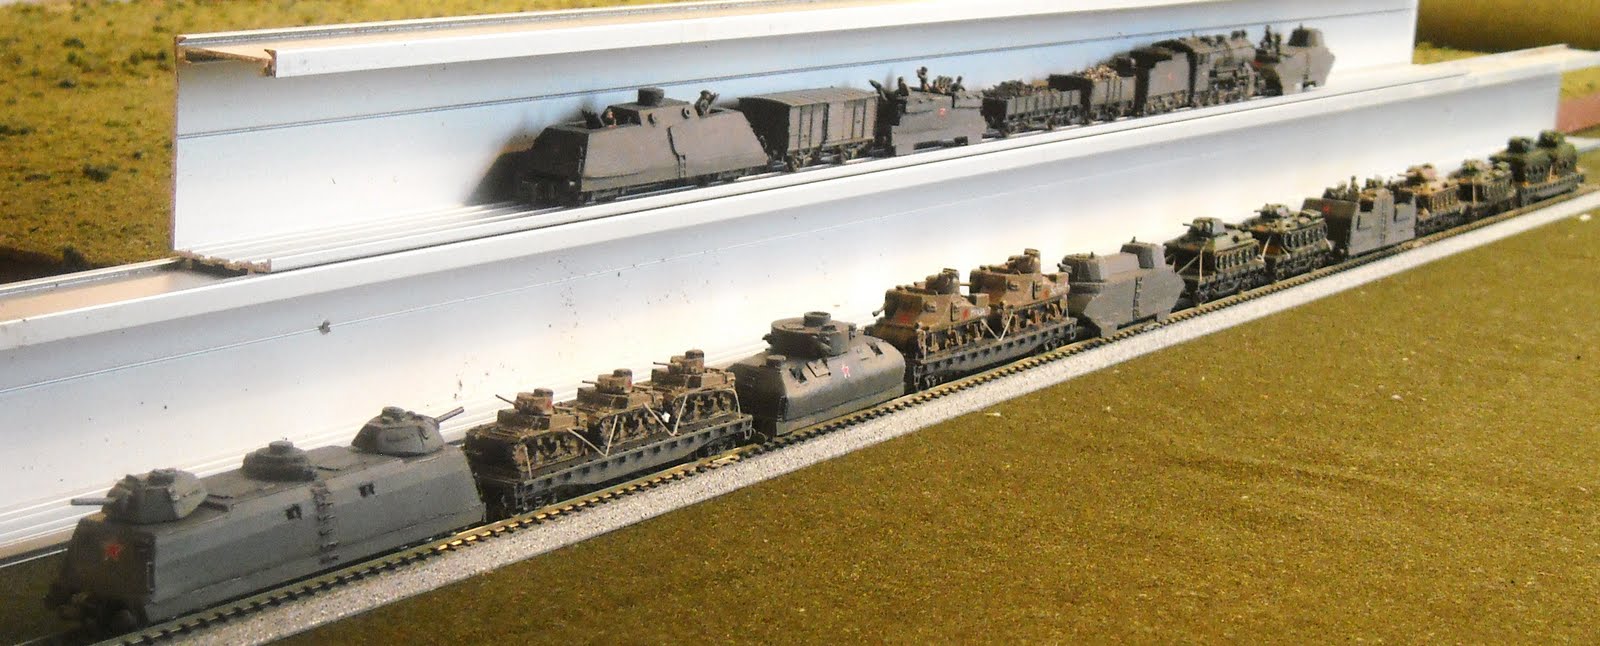 The Historical Miniaturist: NScale Soviet Armored Trains